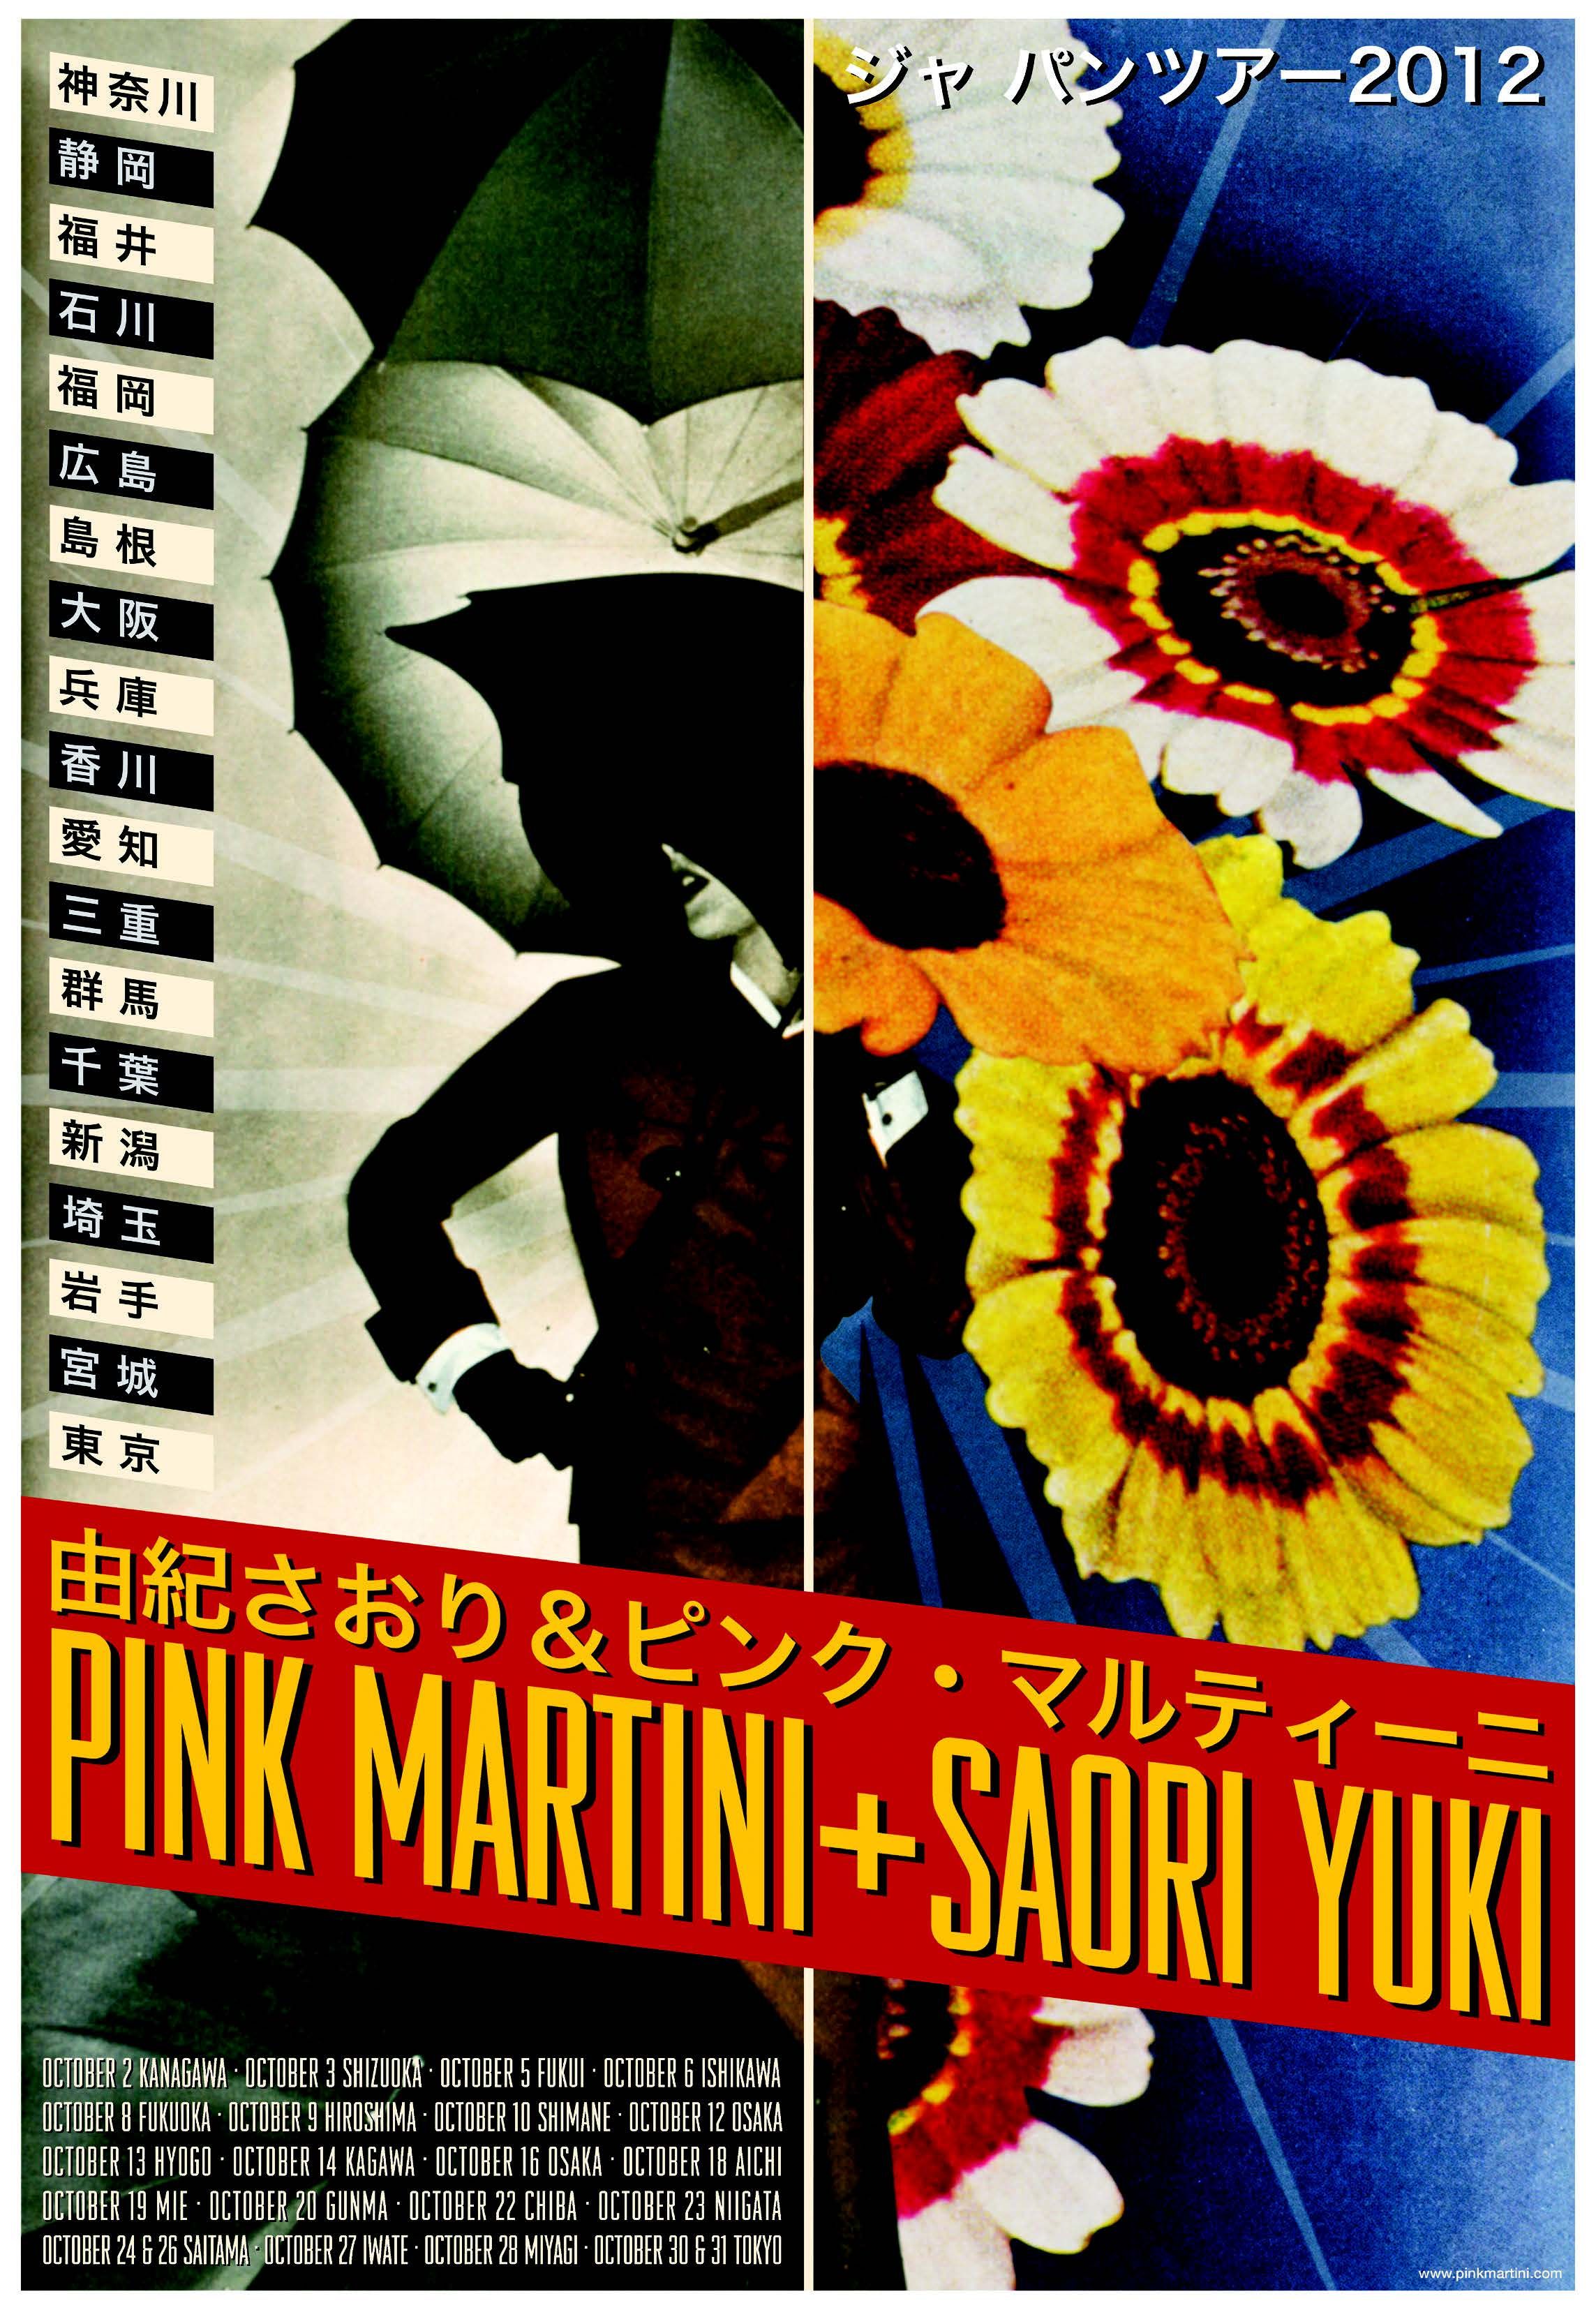 MXP-61.1 Pink Martini 1999 Tour  Nov 3 Concert Poster